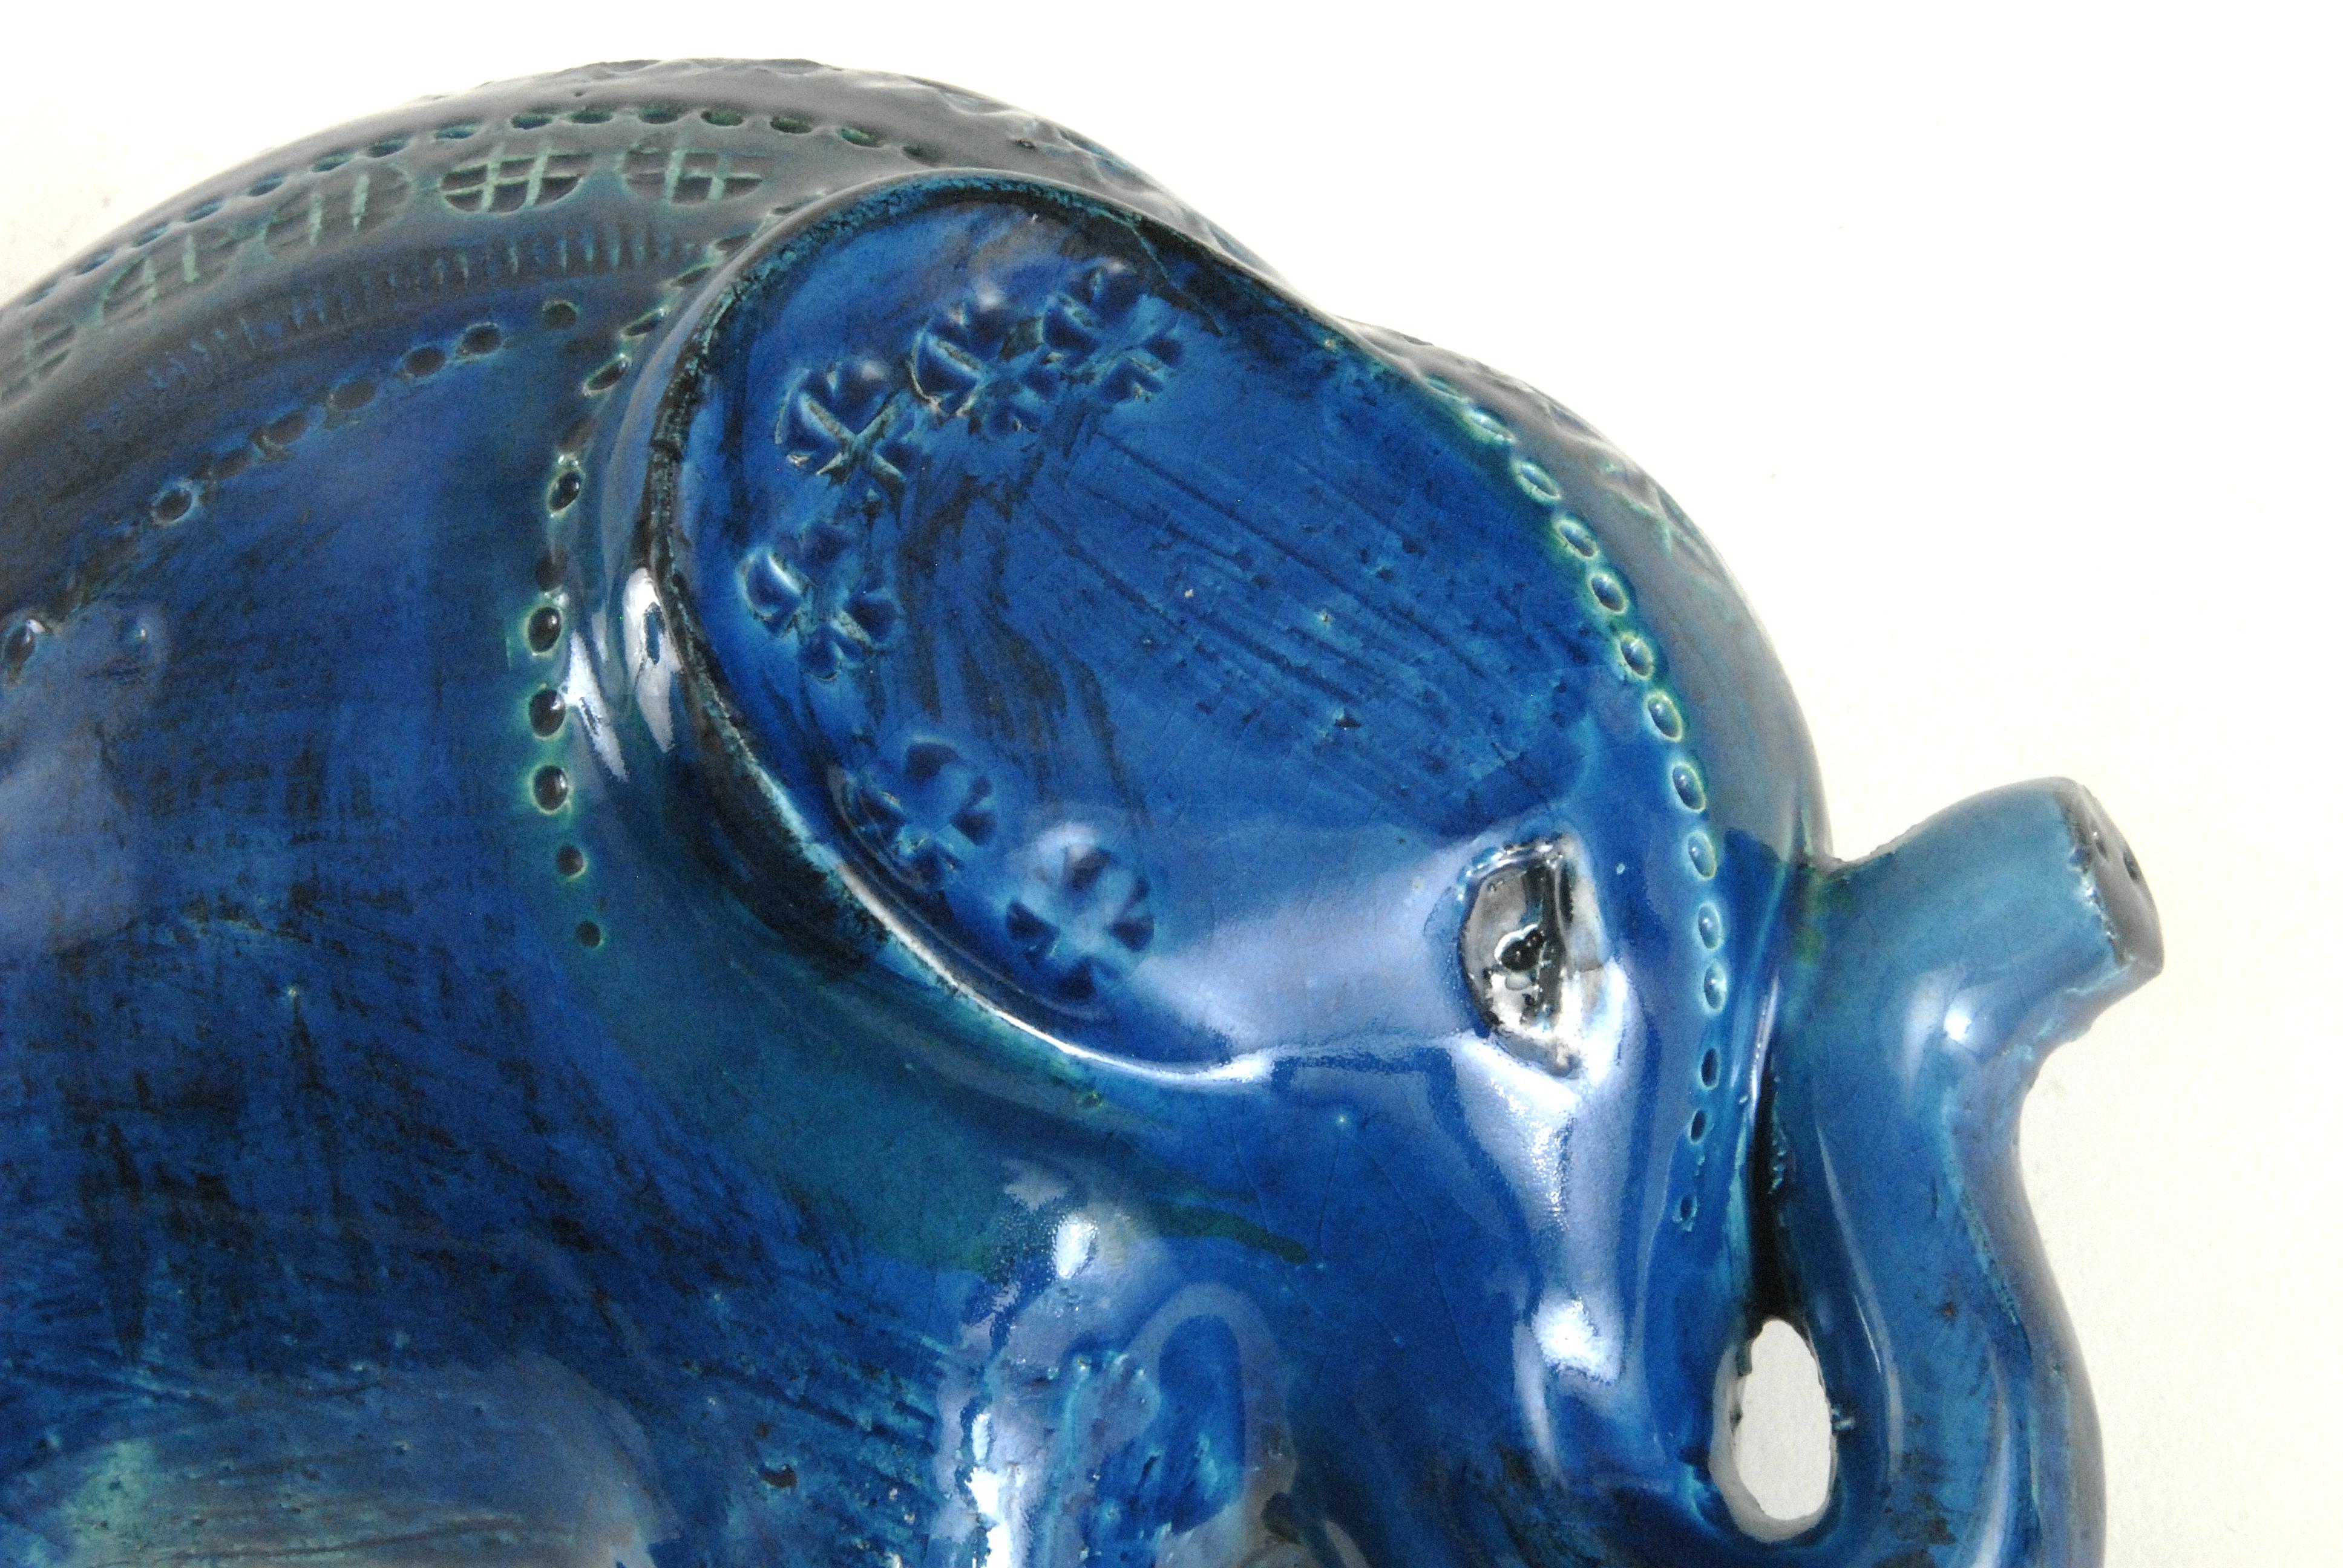 Hand-Crafted Bitossi Aldo Londi Rimini Blue Elephant, Italy, circa 1968